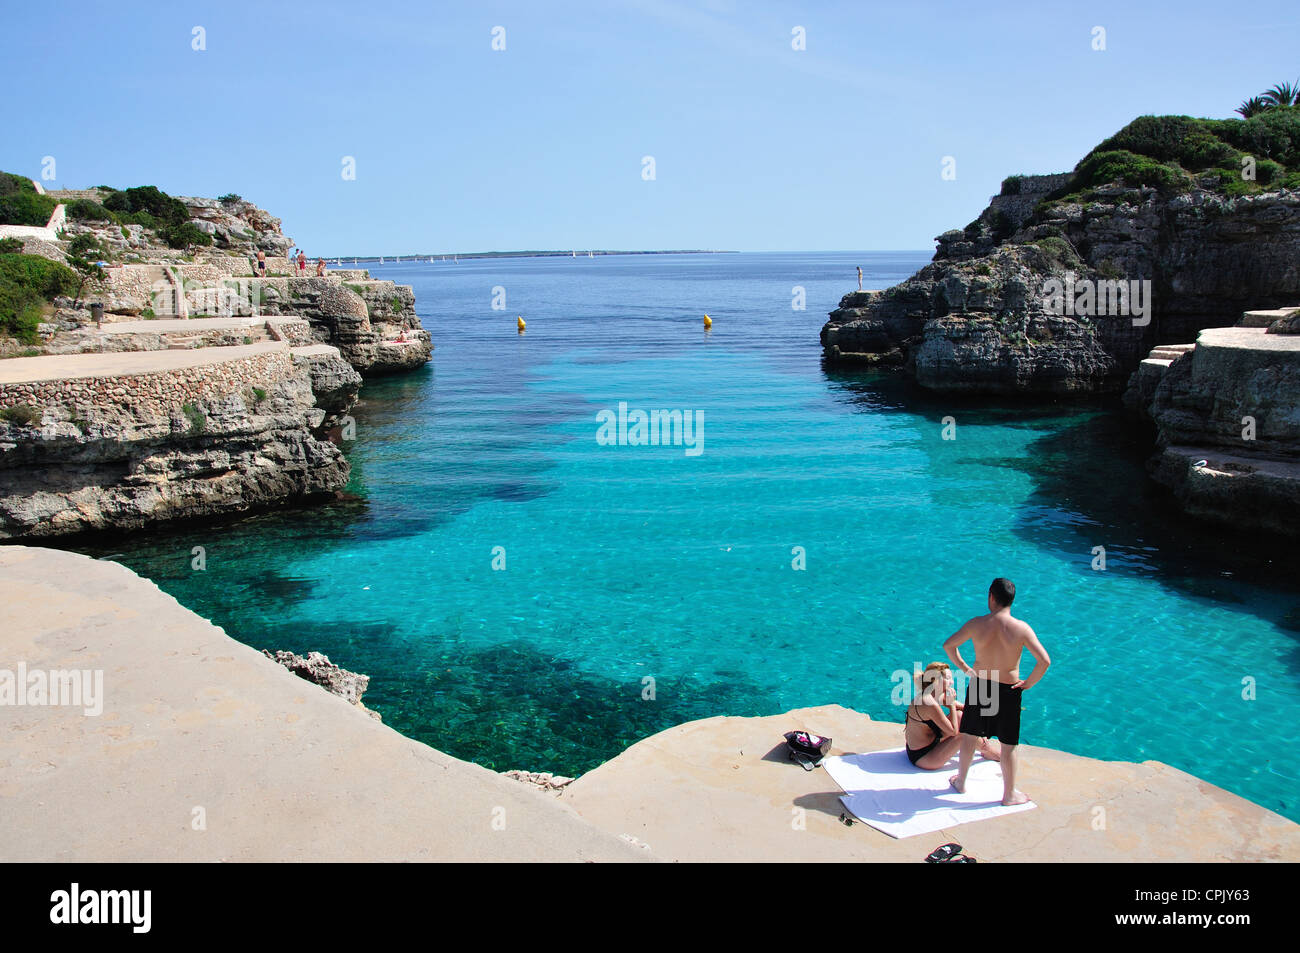 Bathers on rocky ledges, Cala en Forcat, Menorca, Balearic Islands, Spain Stock Photo